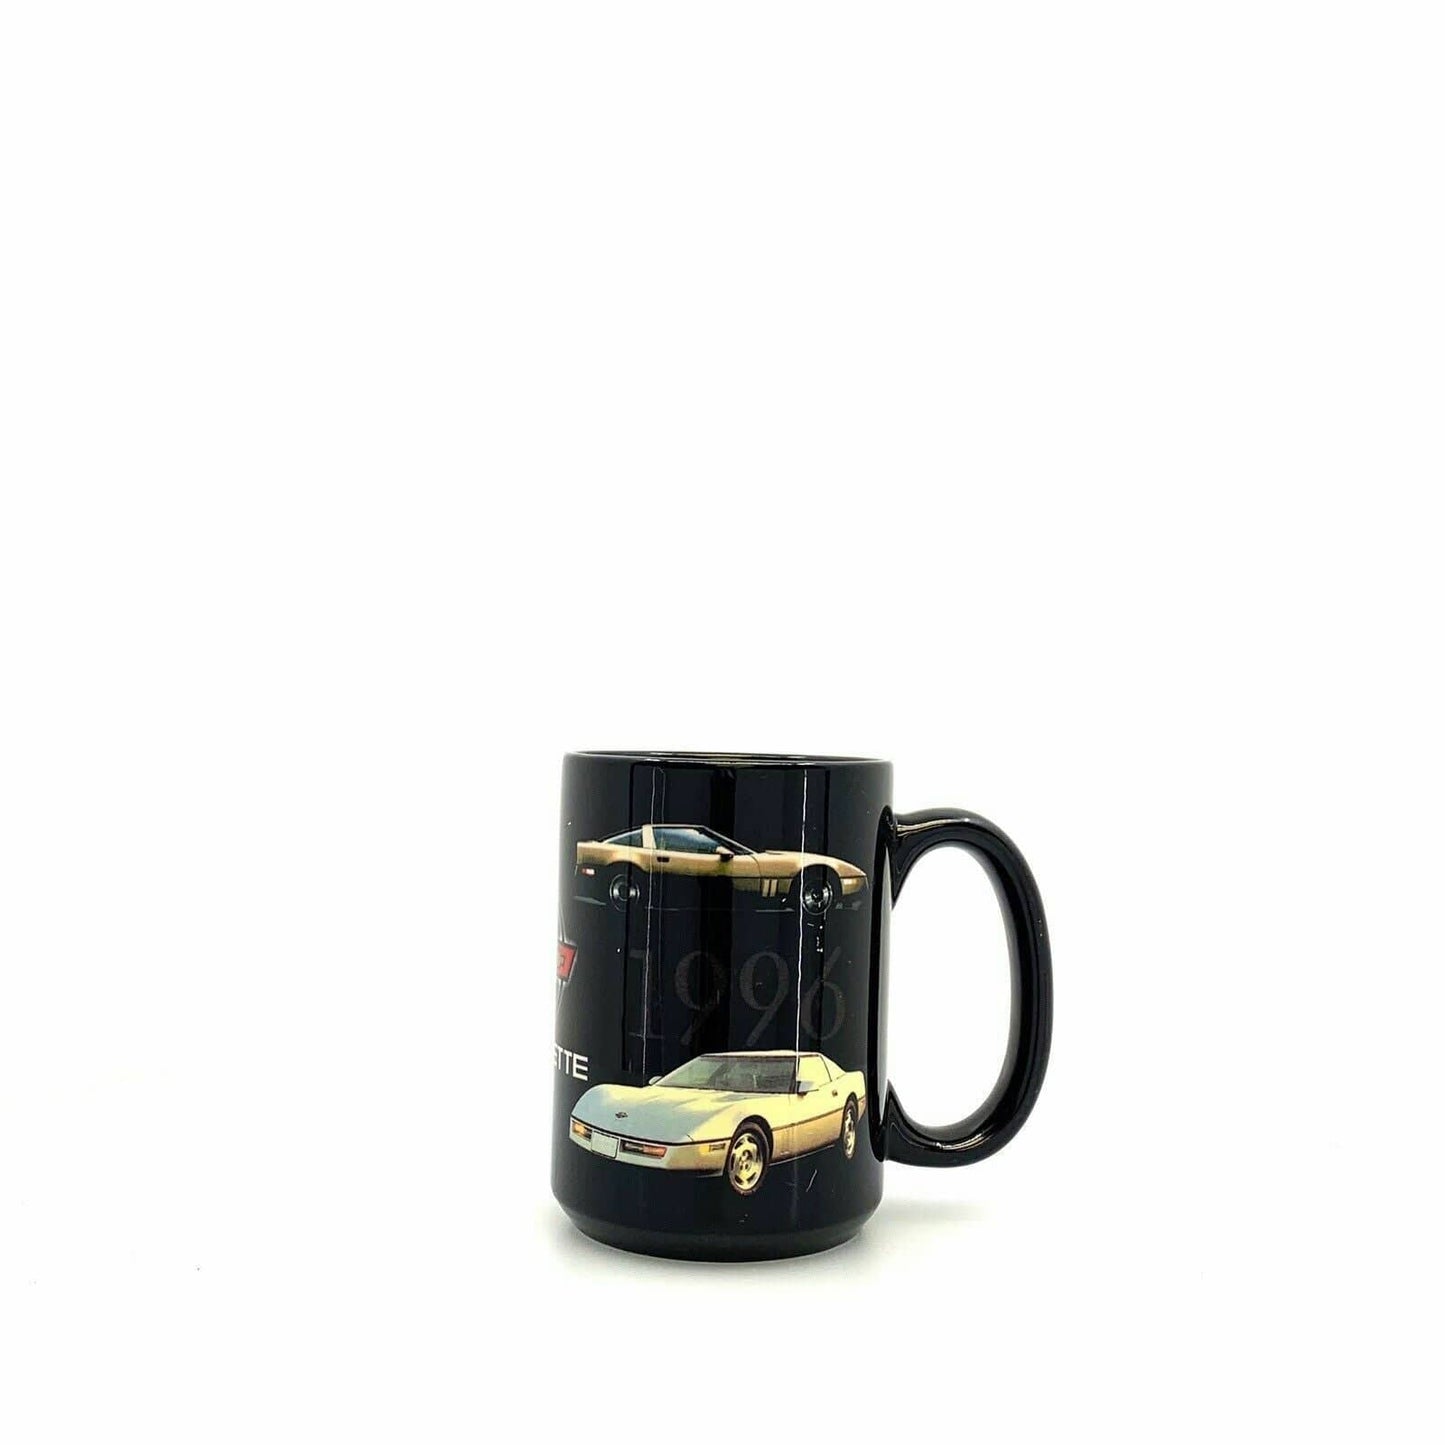 Nostalgic Chevrolet Corvette Vintage Coffee Cup - 16oz, Black, Very Good